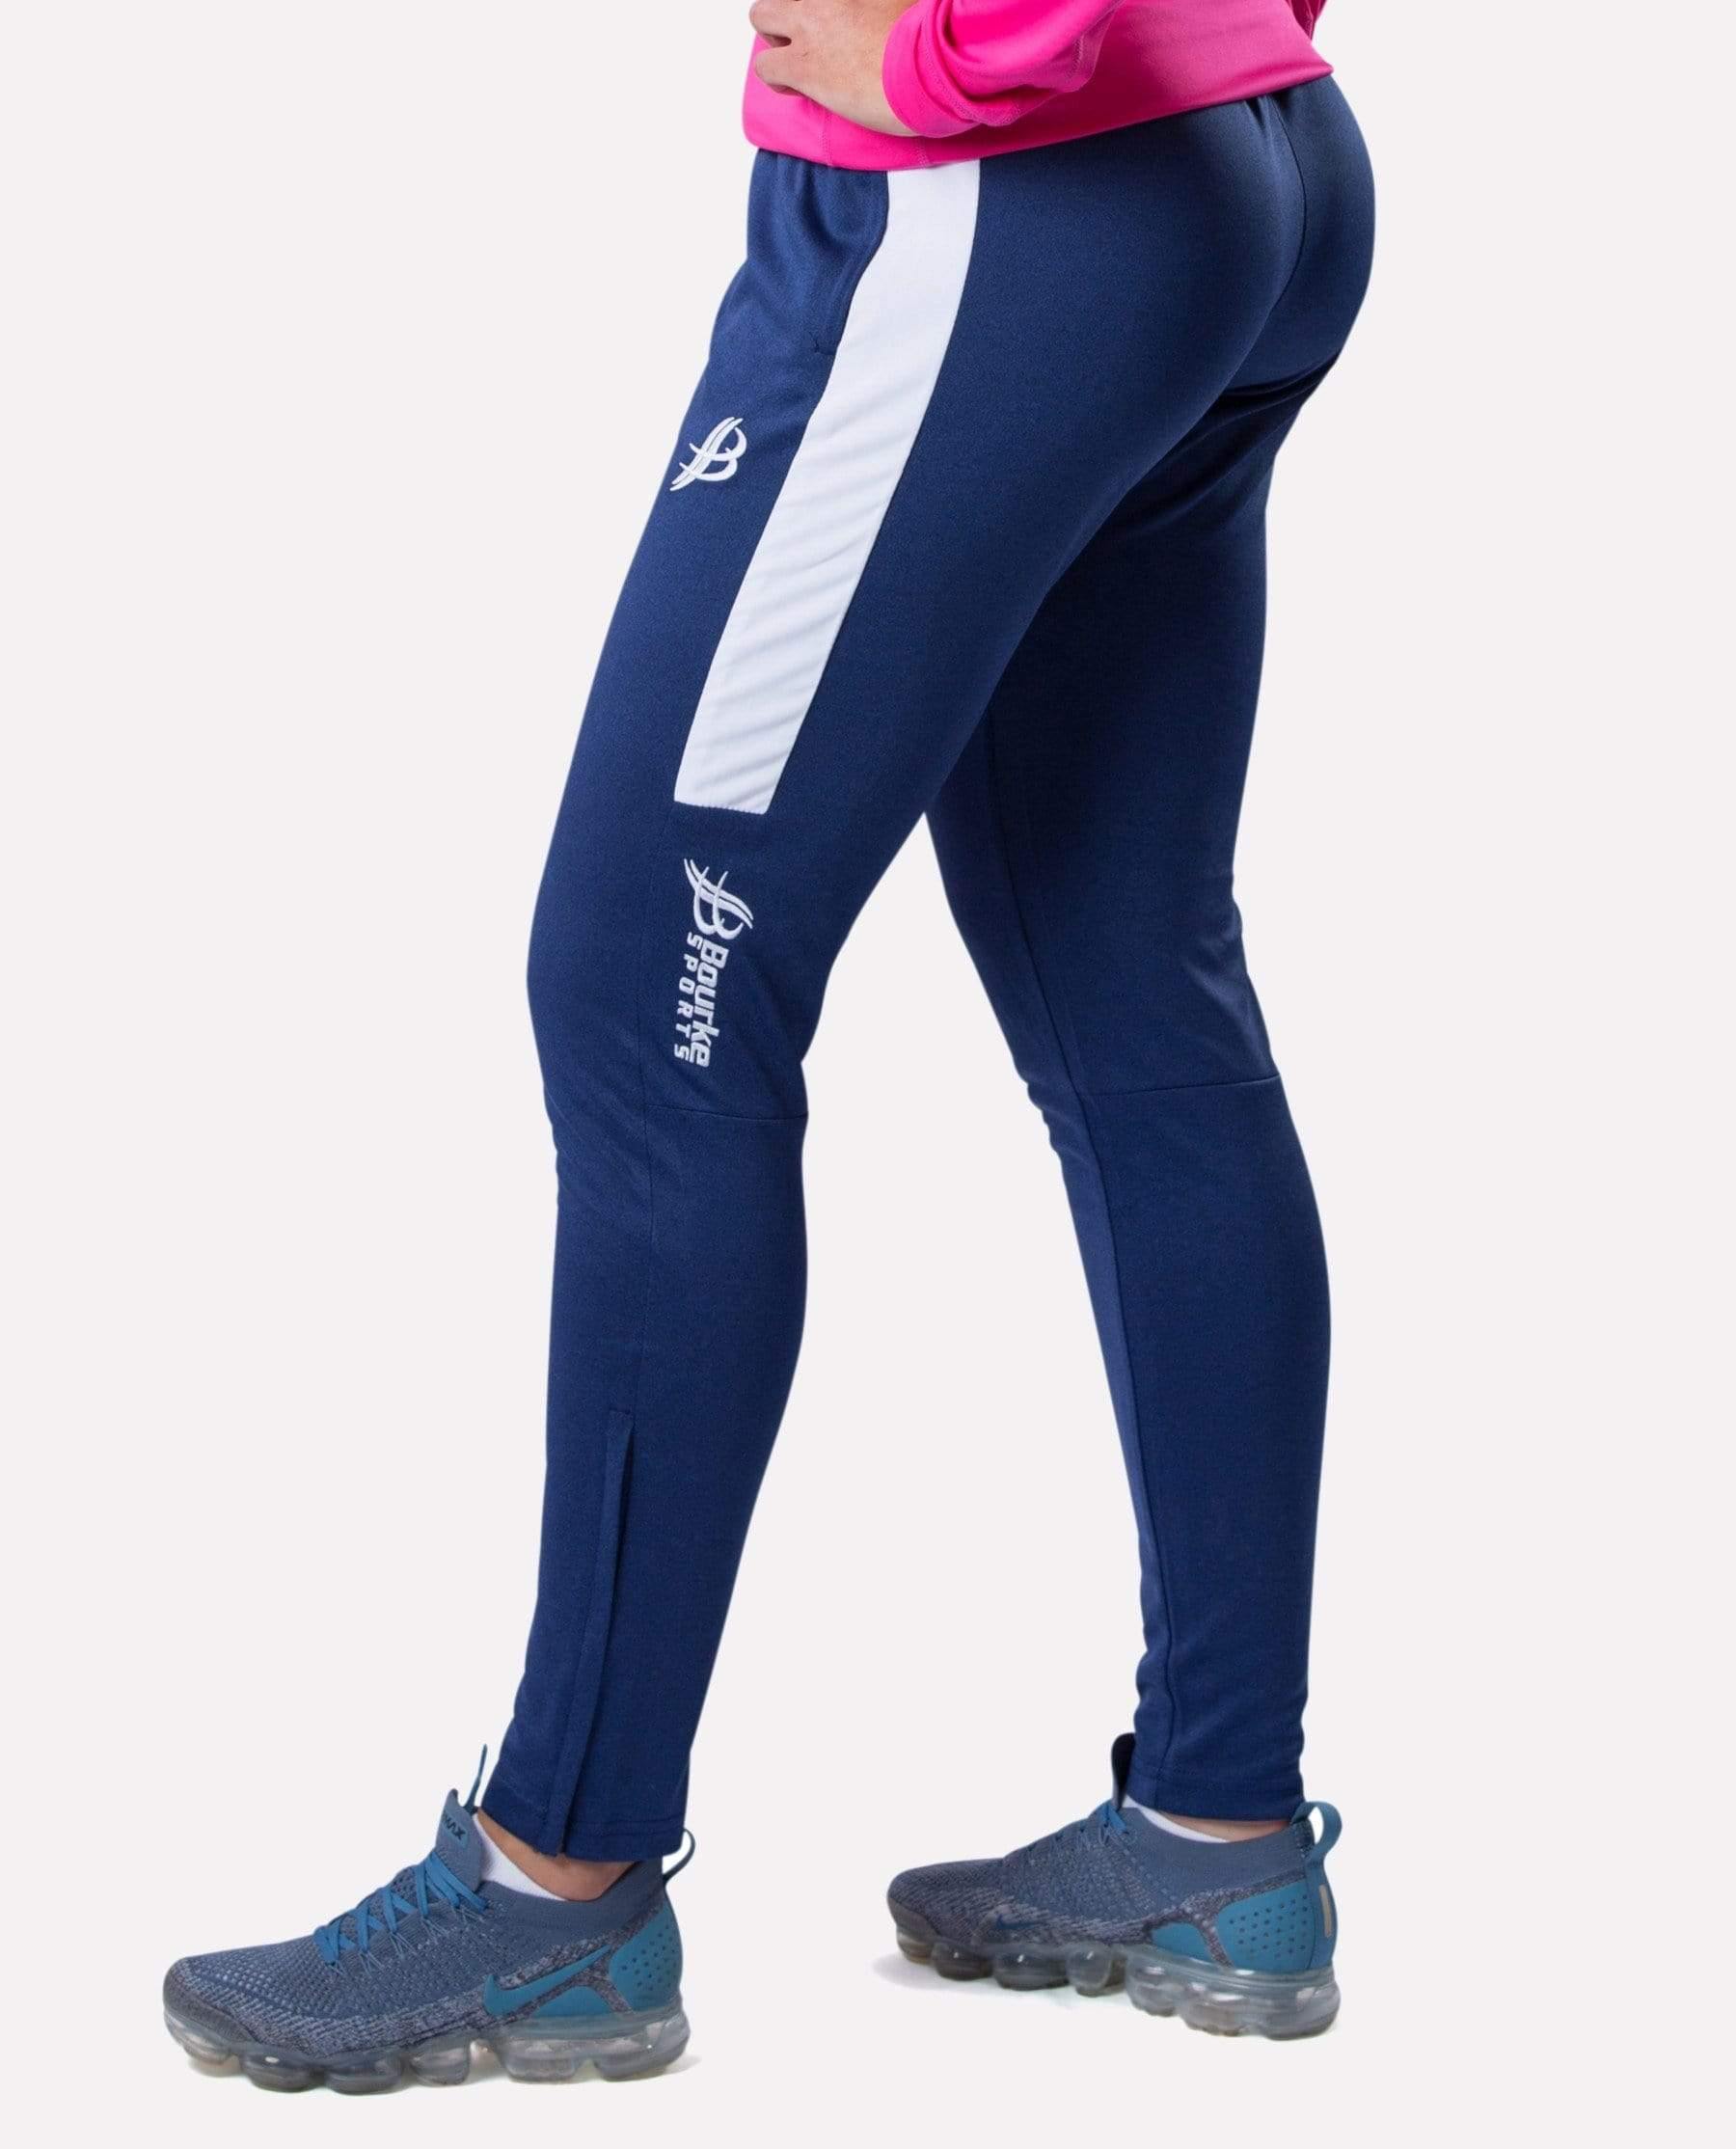 ALPHA Adult Skinny Pants (Navy/White) - Bourke Sports Limited